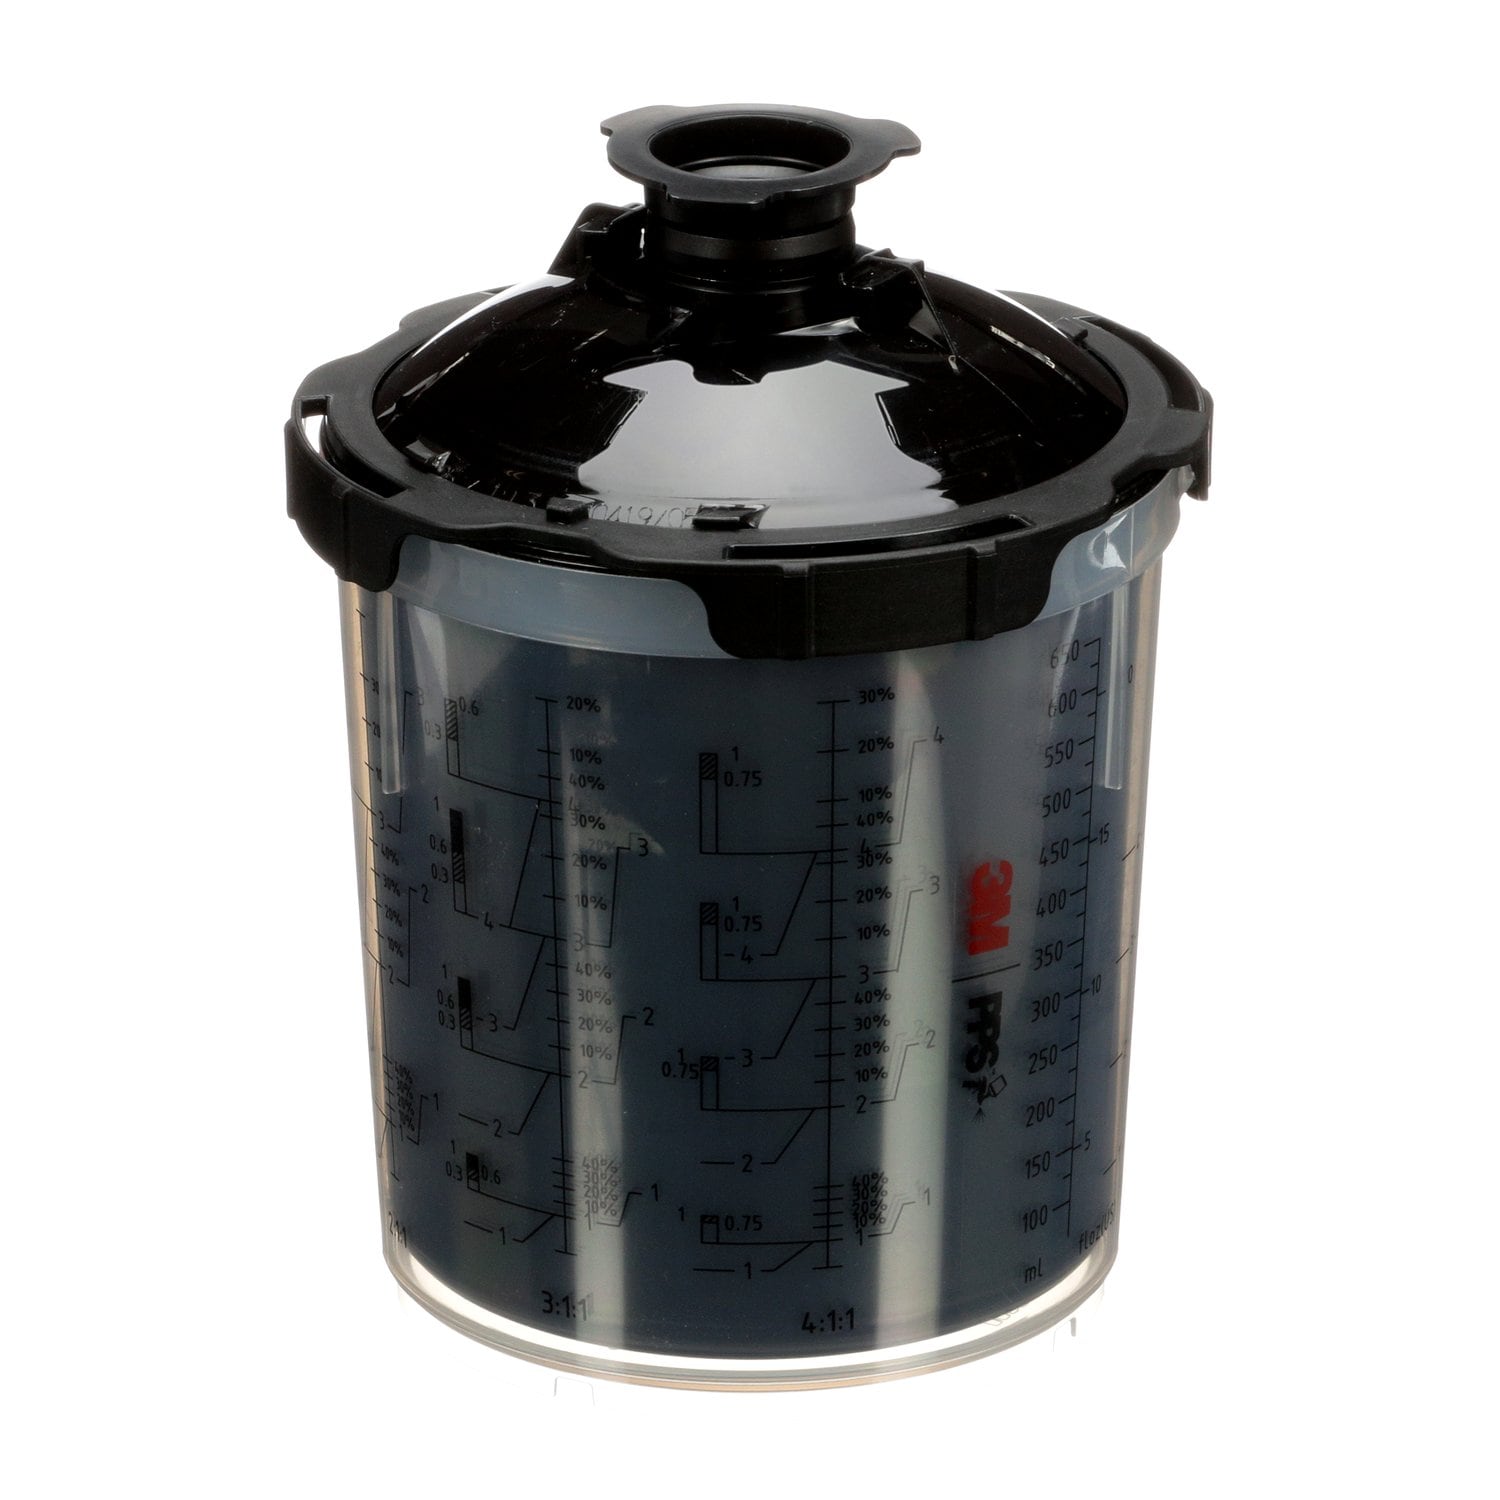 7100128902 - 3M PPS Series 2.0 Spray Cup System UV Kit 26710, Standard (22 fl oz, 650 mL), 200 Micron Filter, 1 Kit/Case